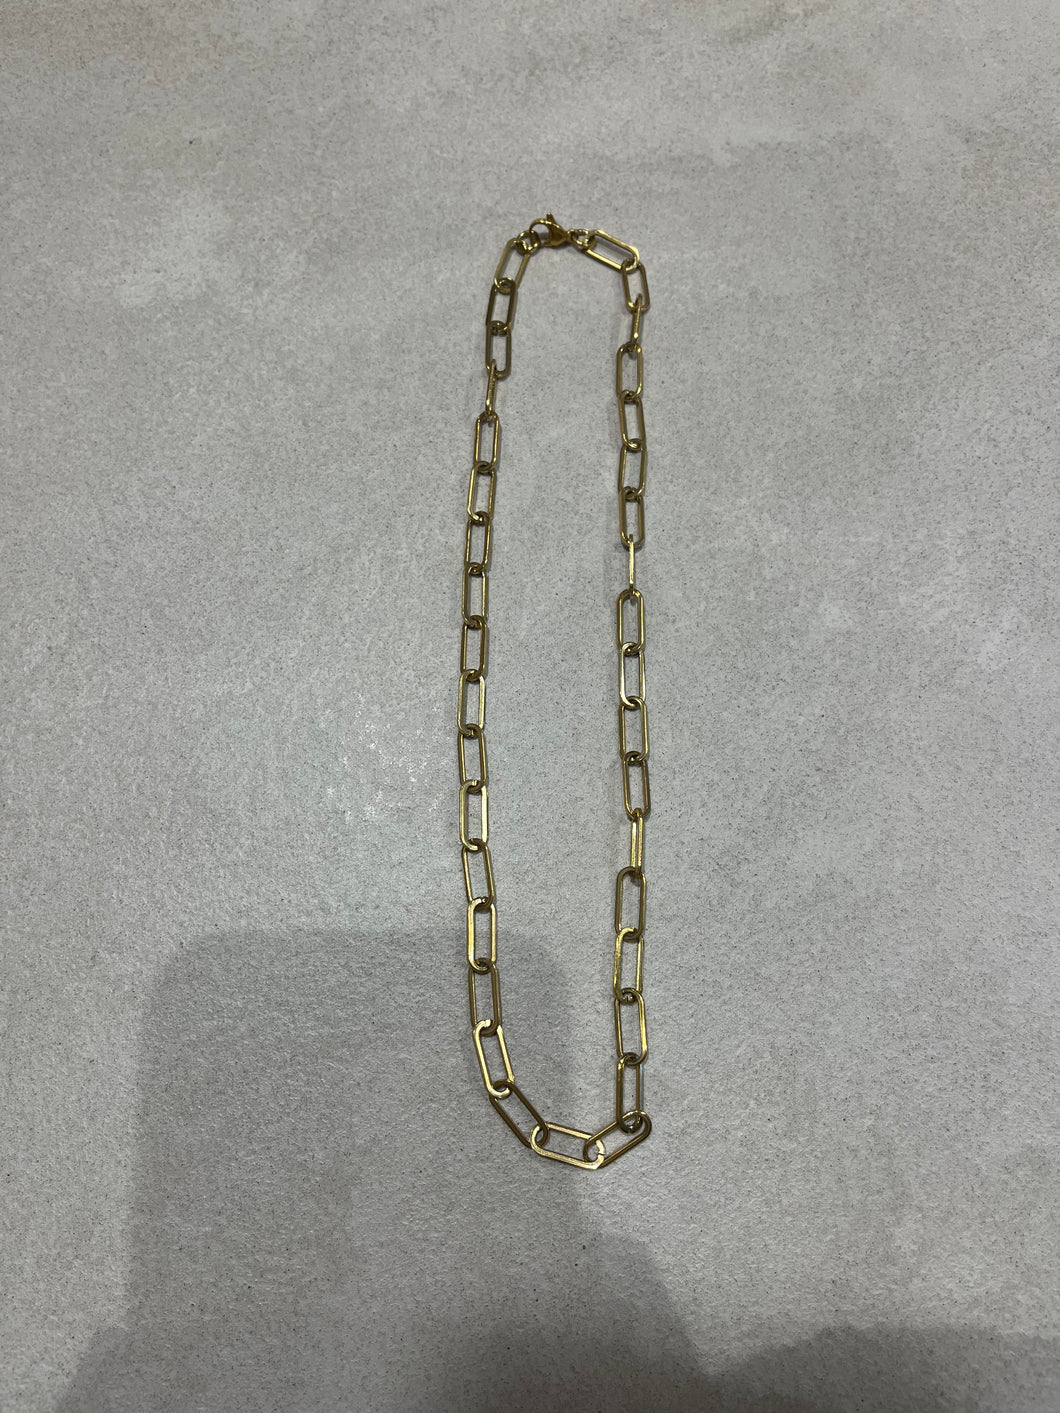 03 Gold Buoy mermaid necklace